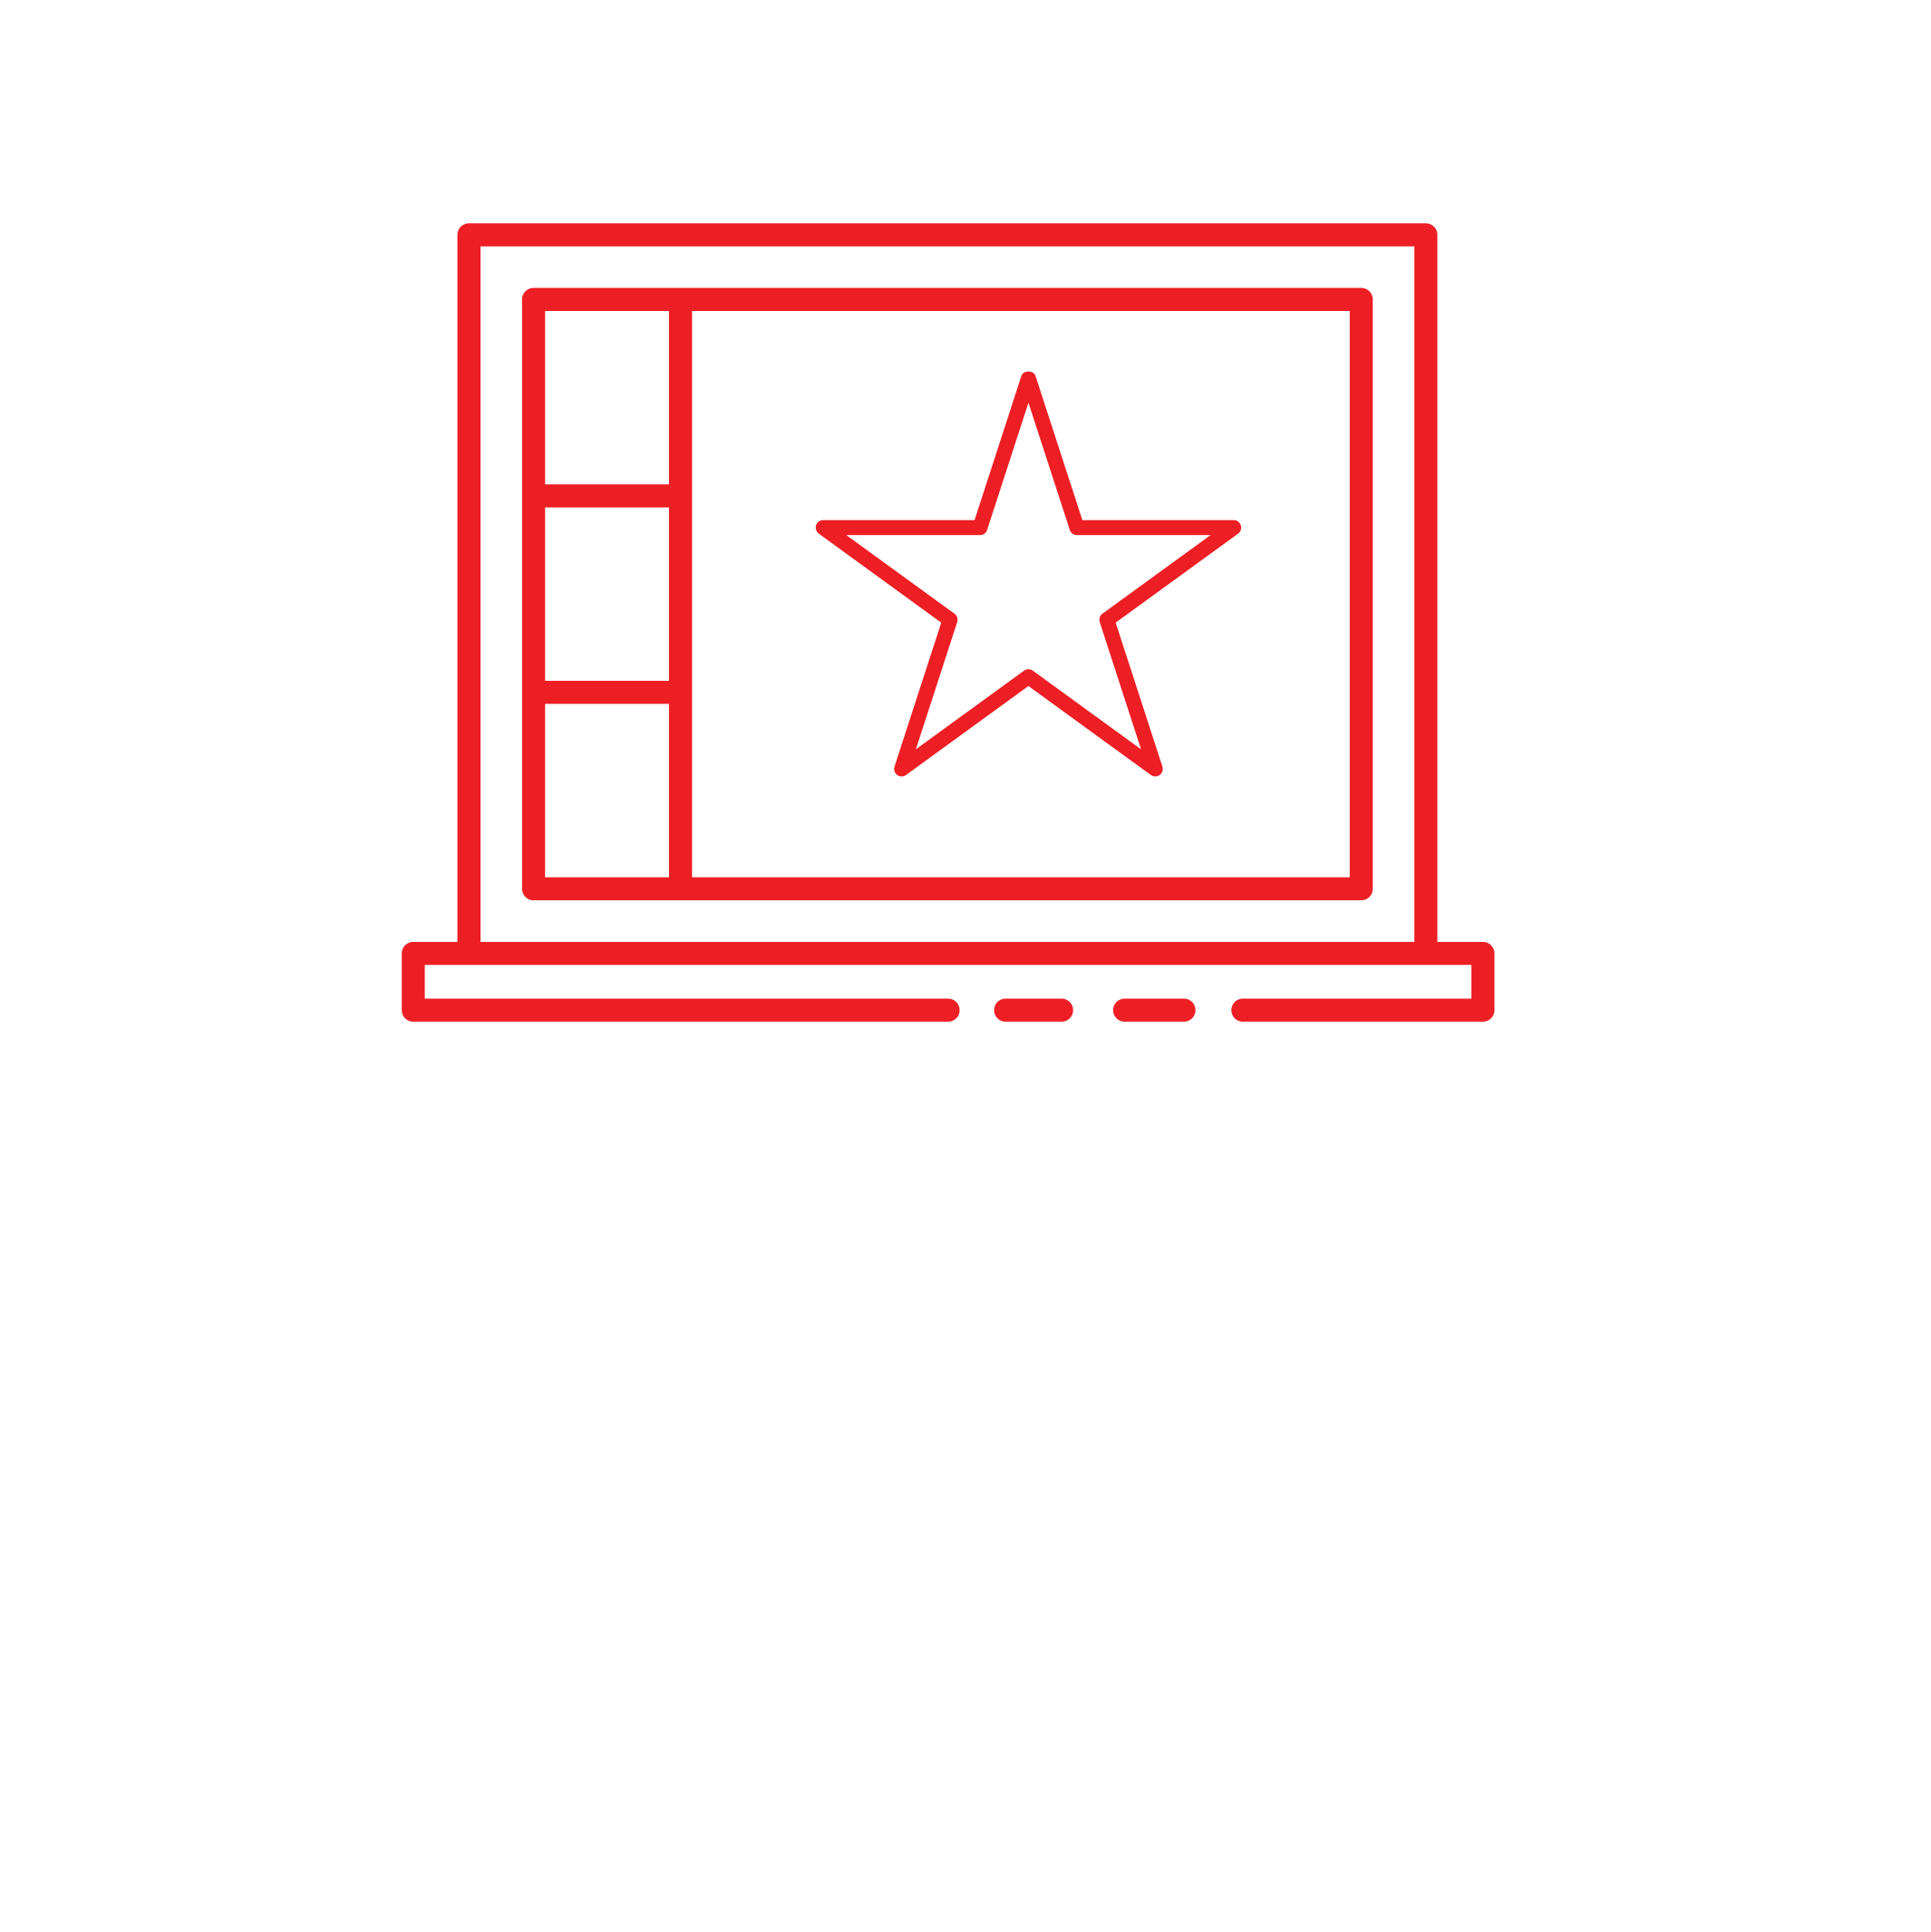 Enhance online presence